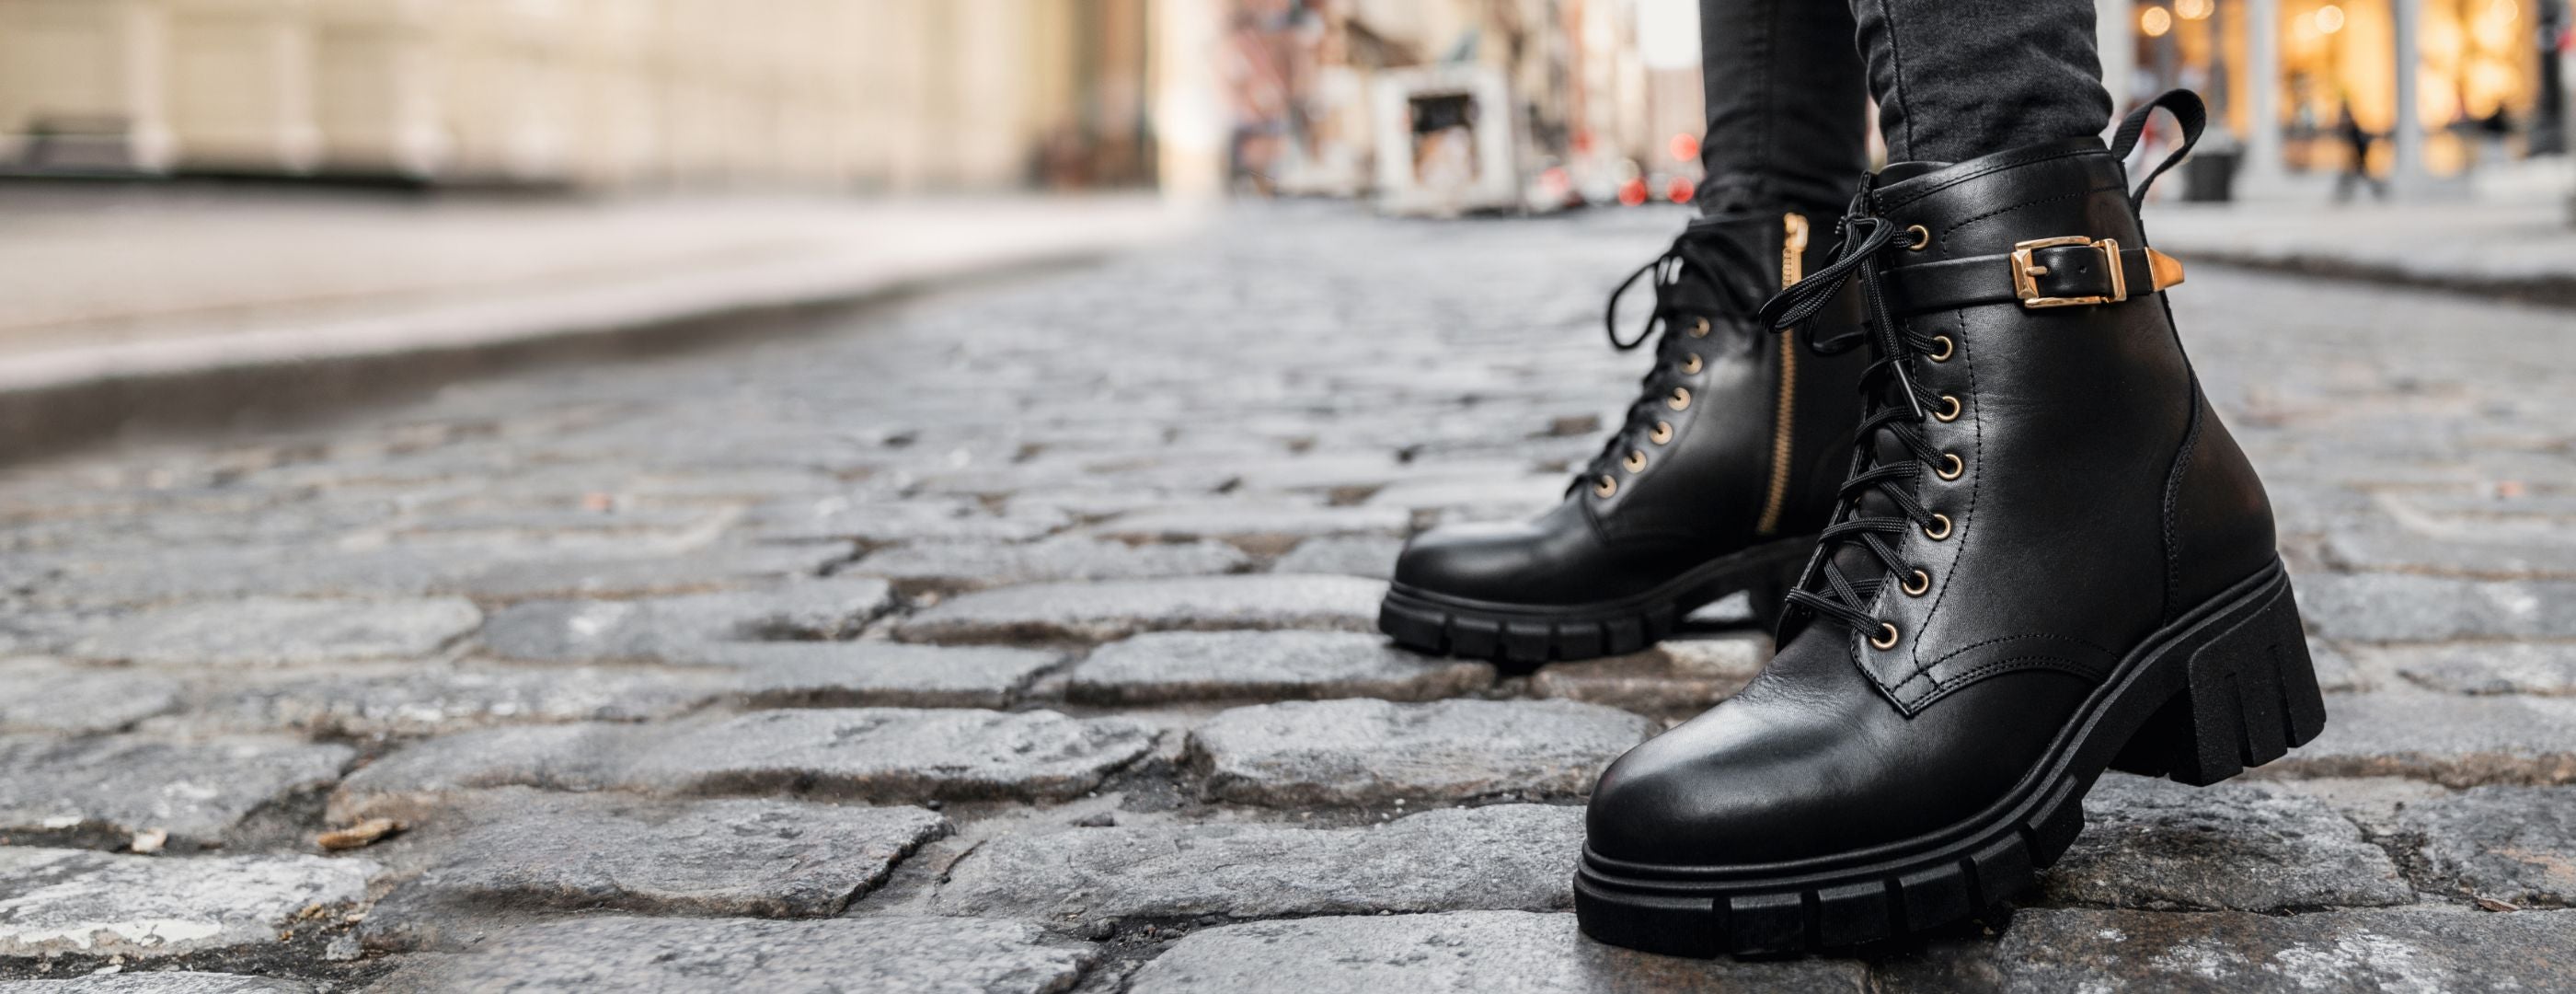 Women's Coda High Heel Zip-Up Boot In Black Cherry Leather - Thursday